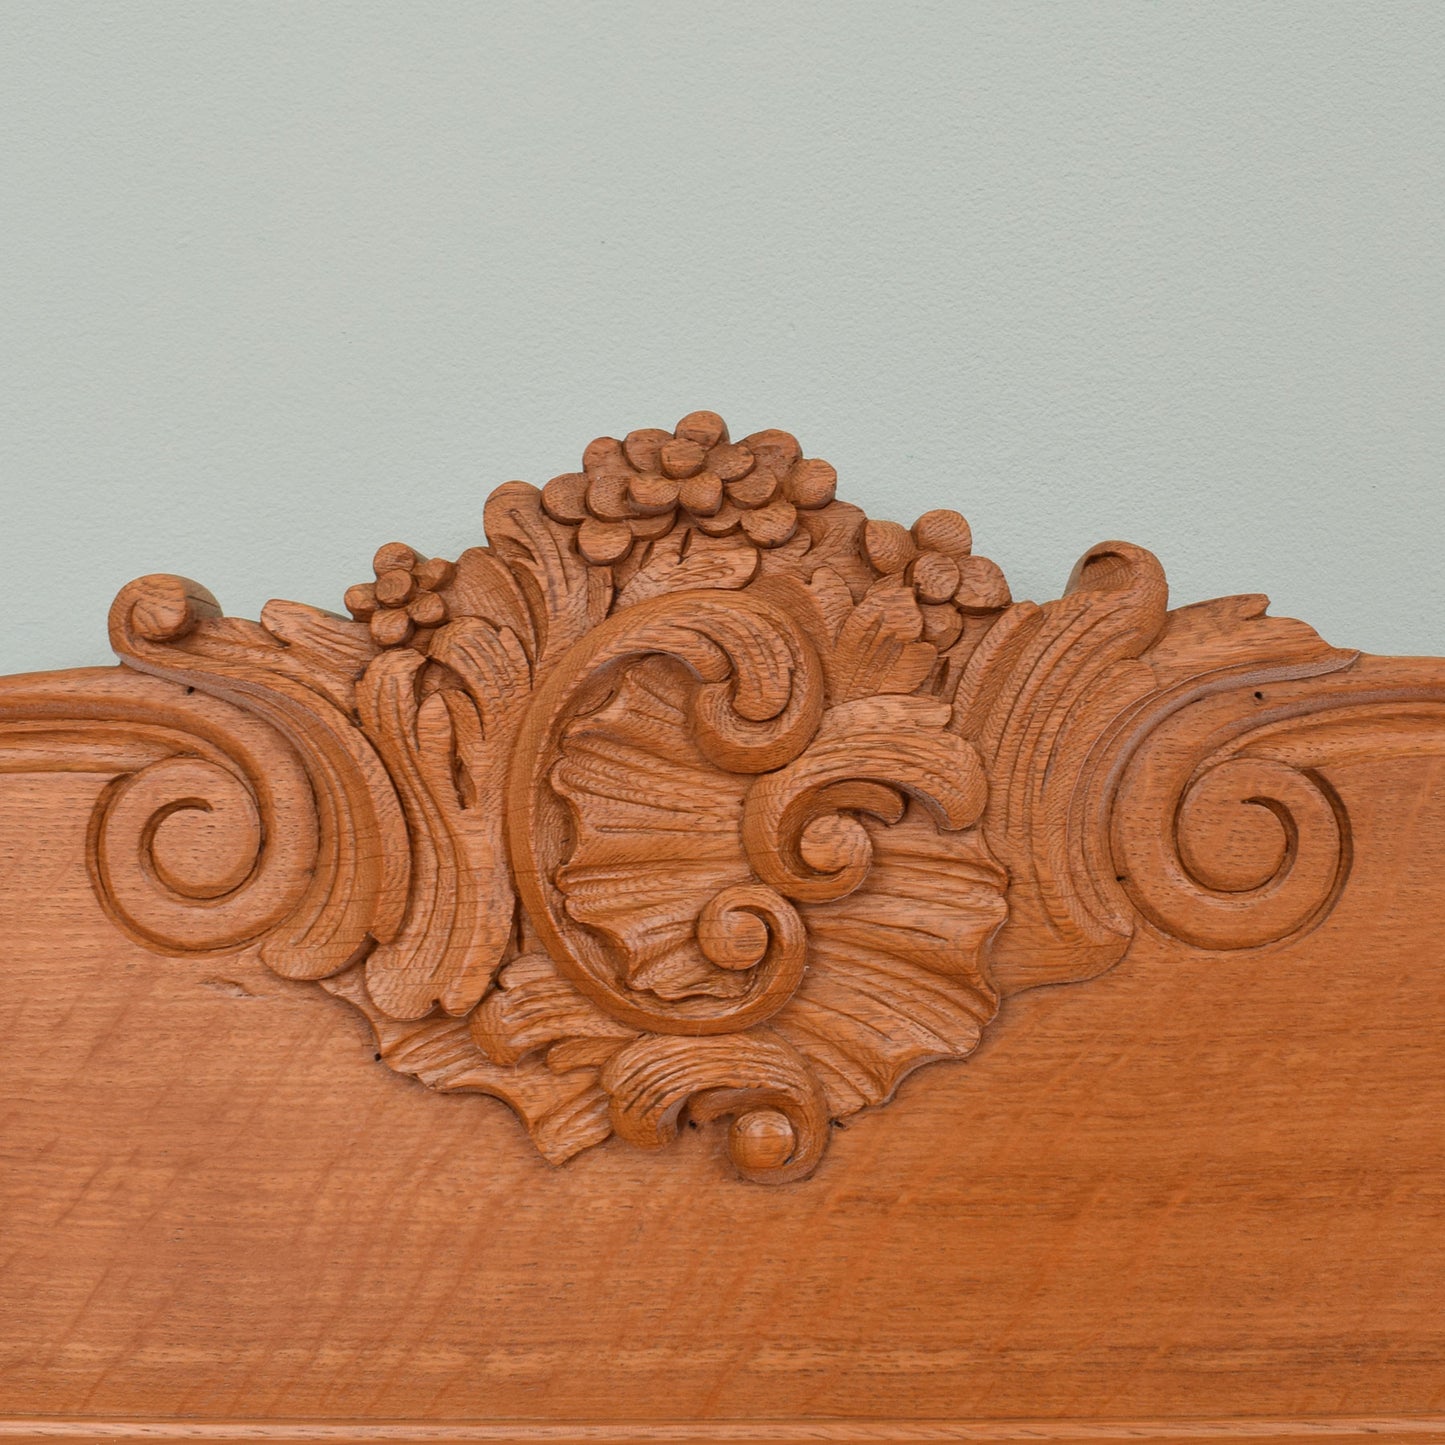 Large Carved French Oak Sideboard